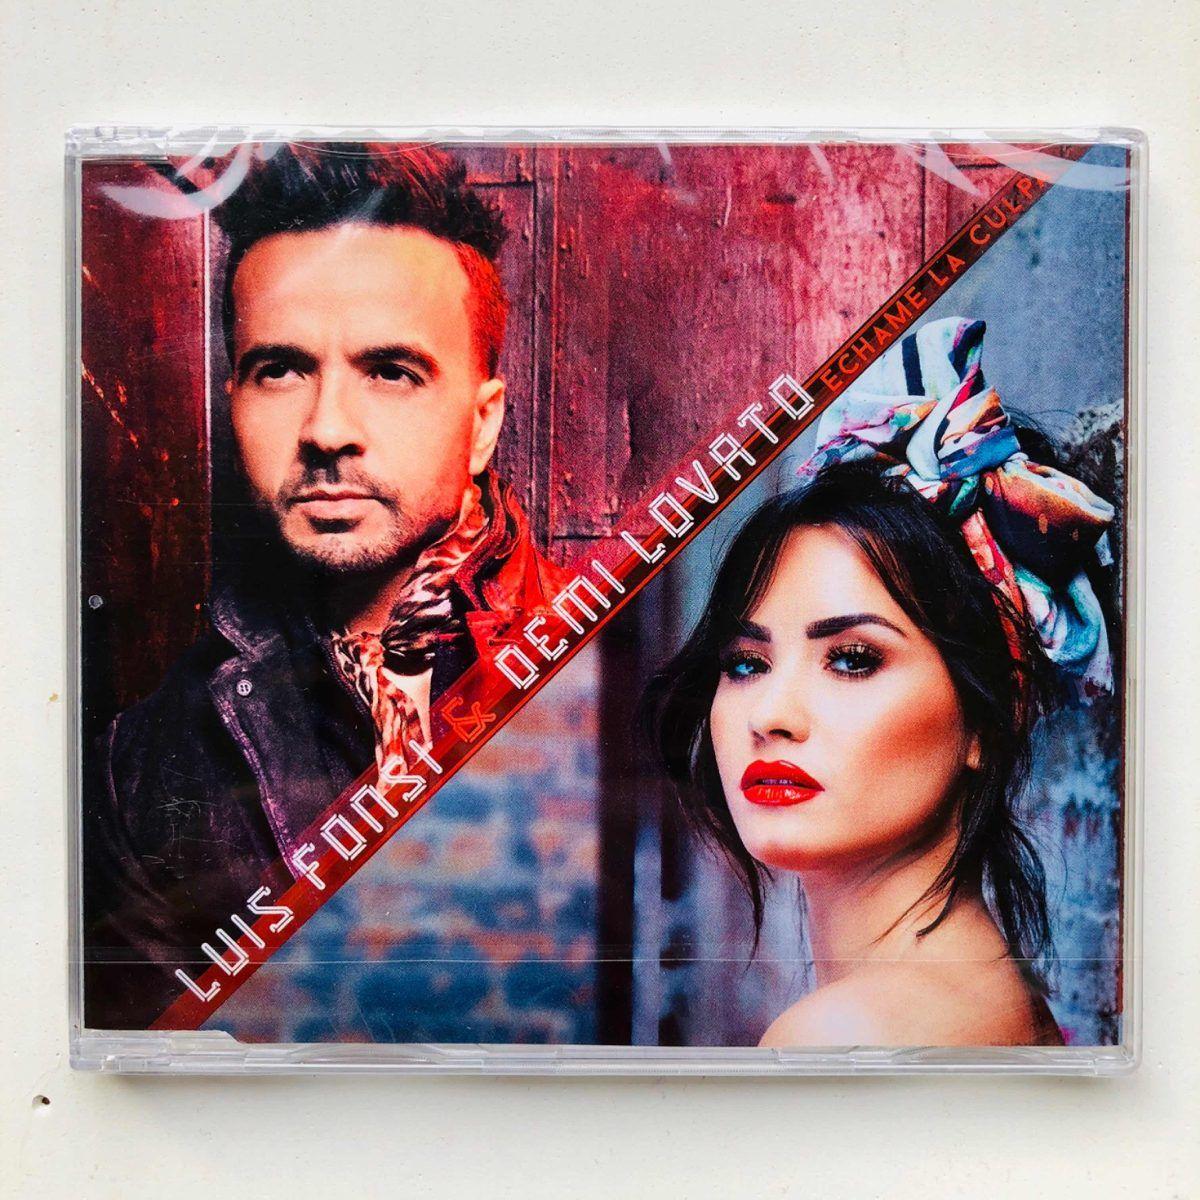 Luis Fonsi & Demi Lovato's 'Echame la Culpa' Lyrics Translated to English